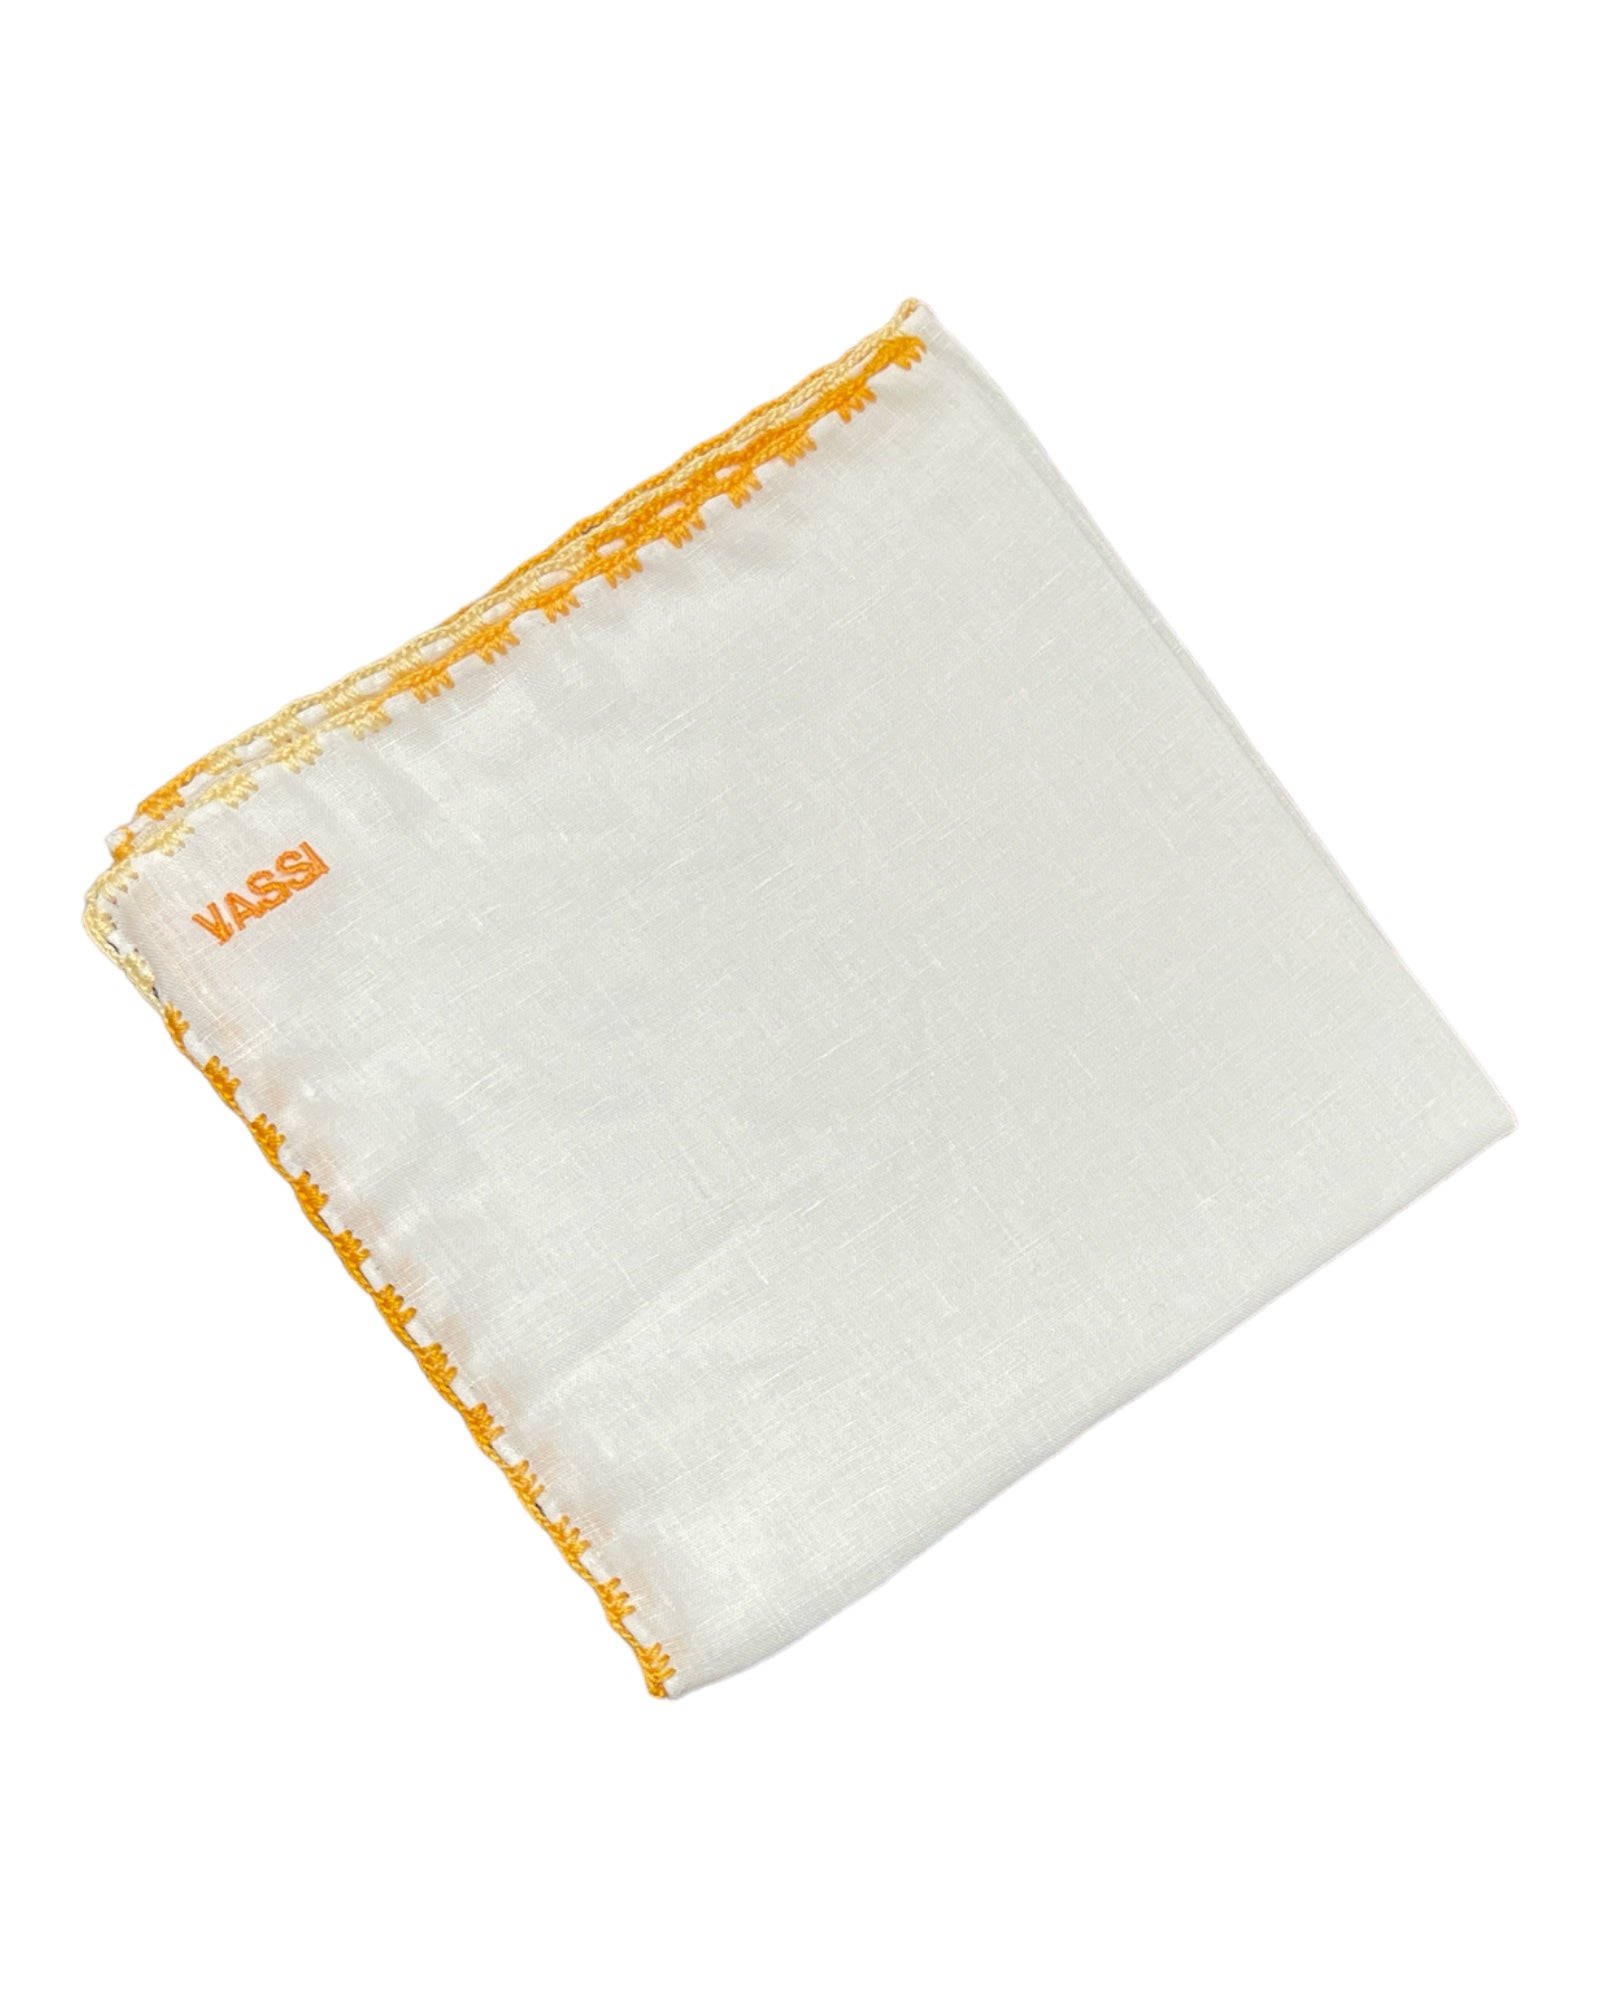 White Linen Pocket Square With Handrolled Triple V- Stitch Pocket SquareYellow-Orange